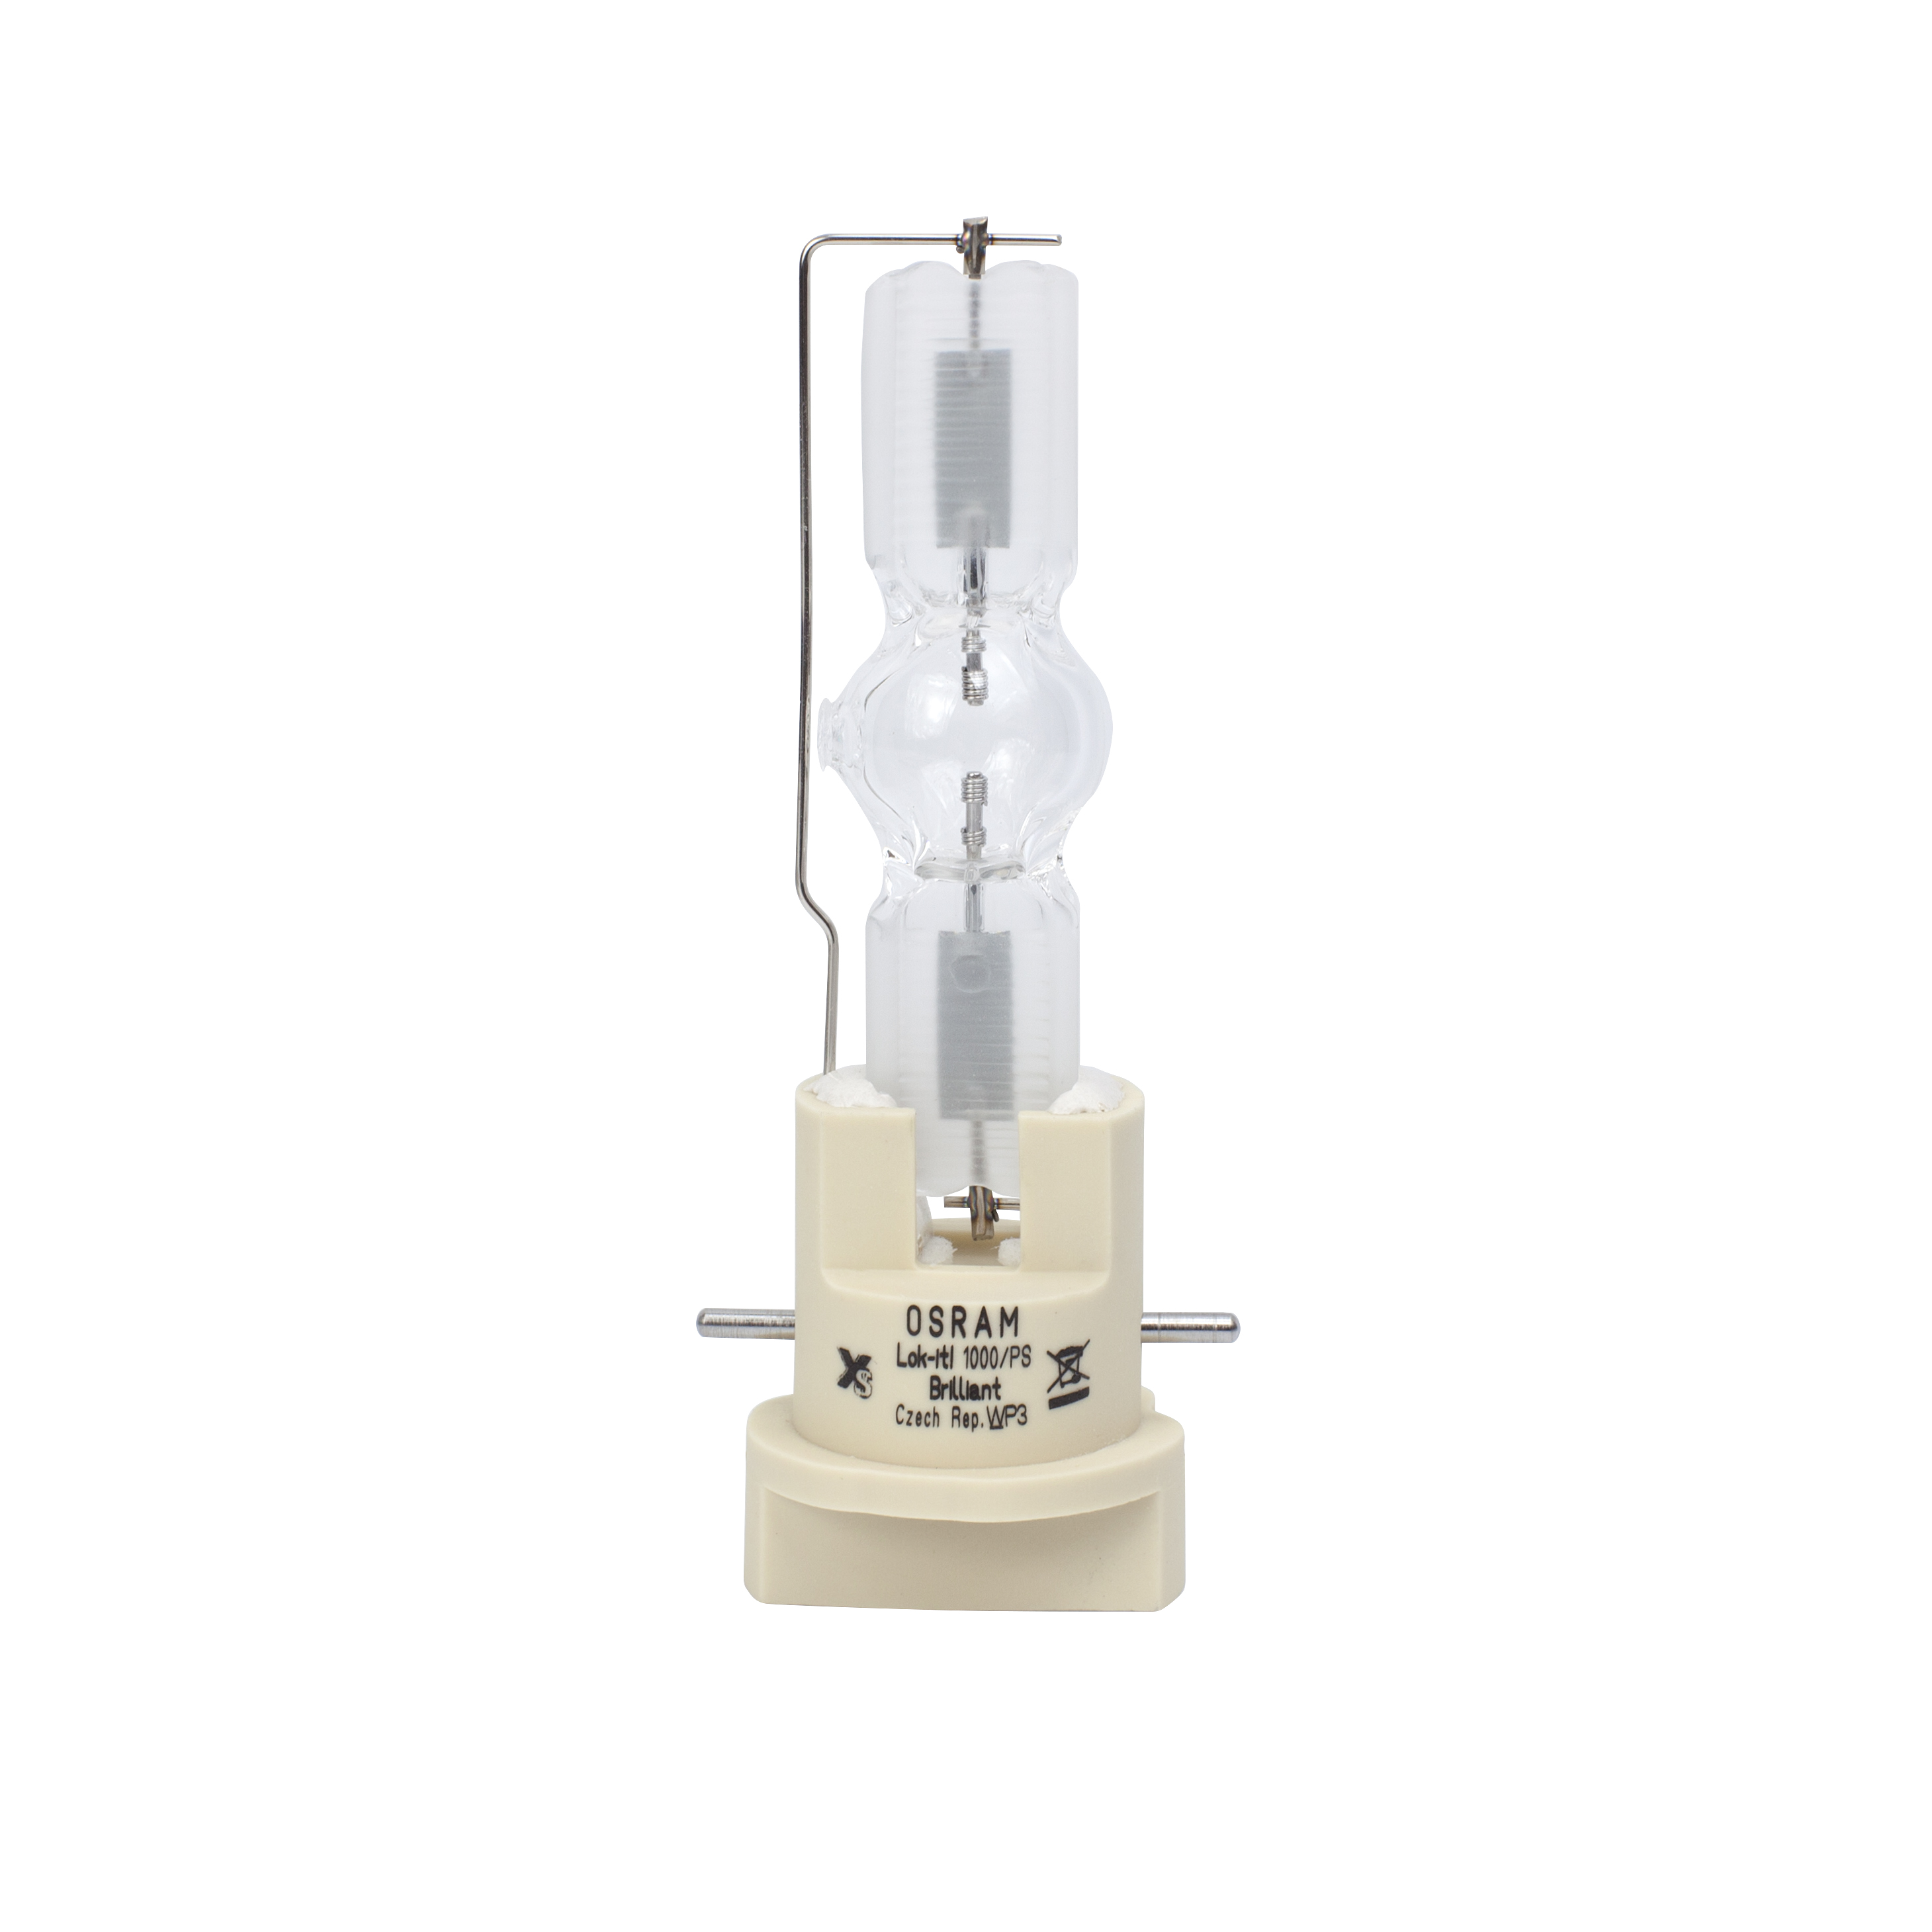 OSRAM Lok-it ® 1000W/PS Brilliant Lamp